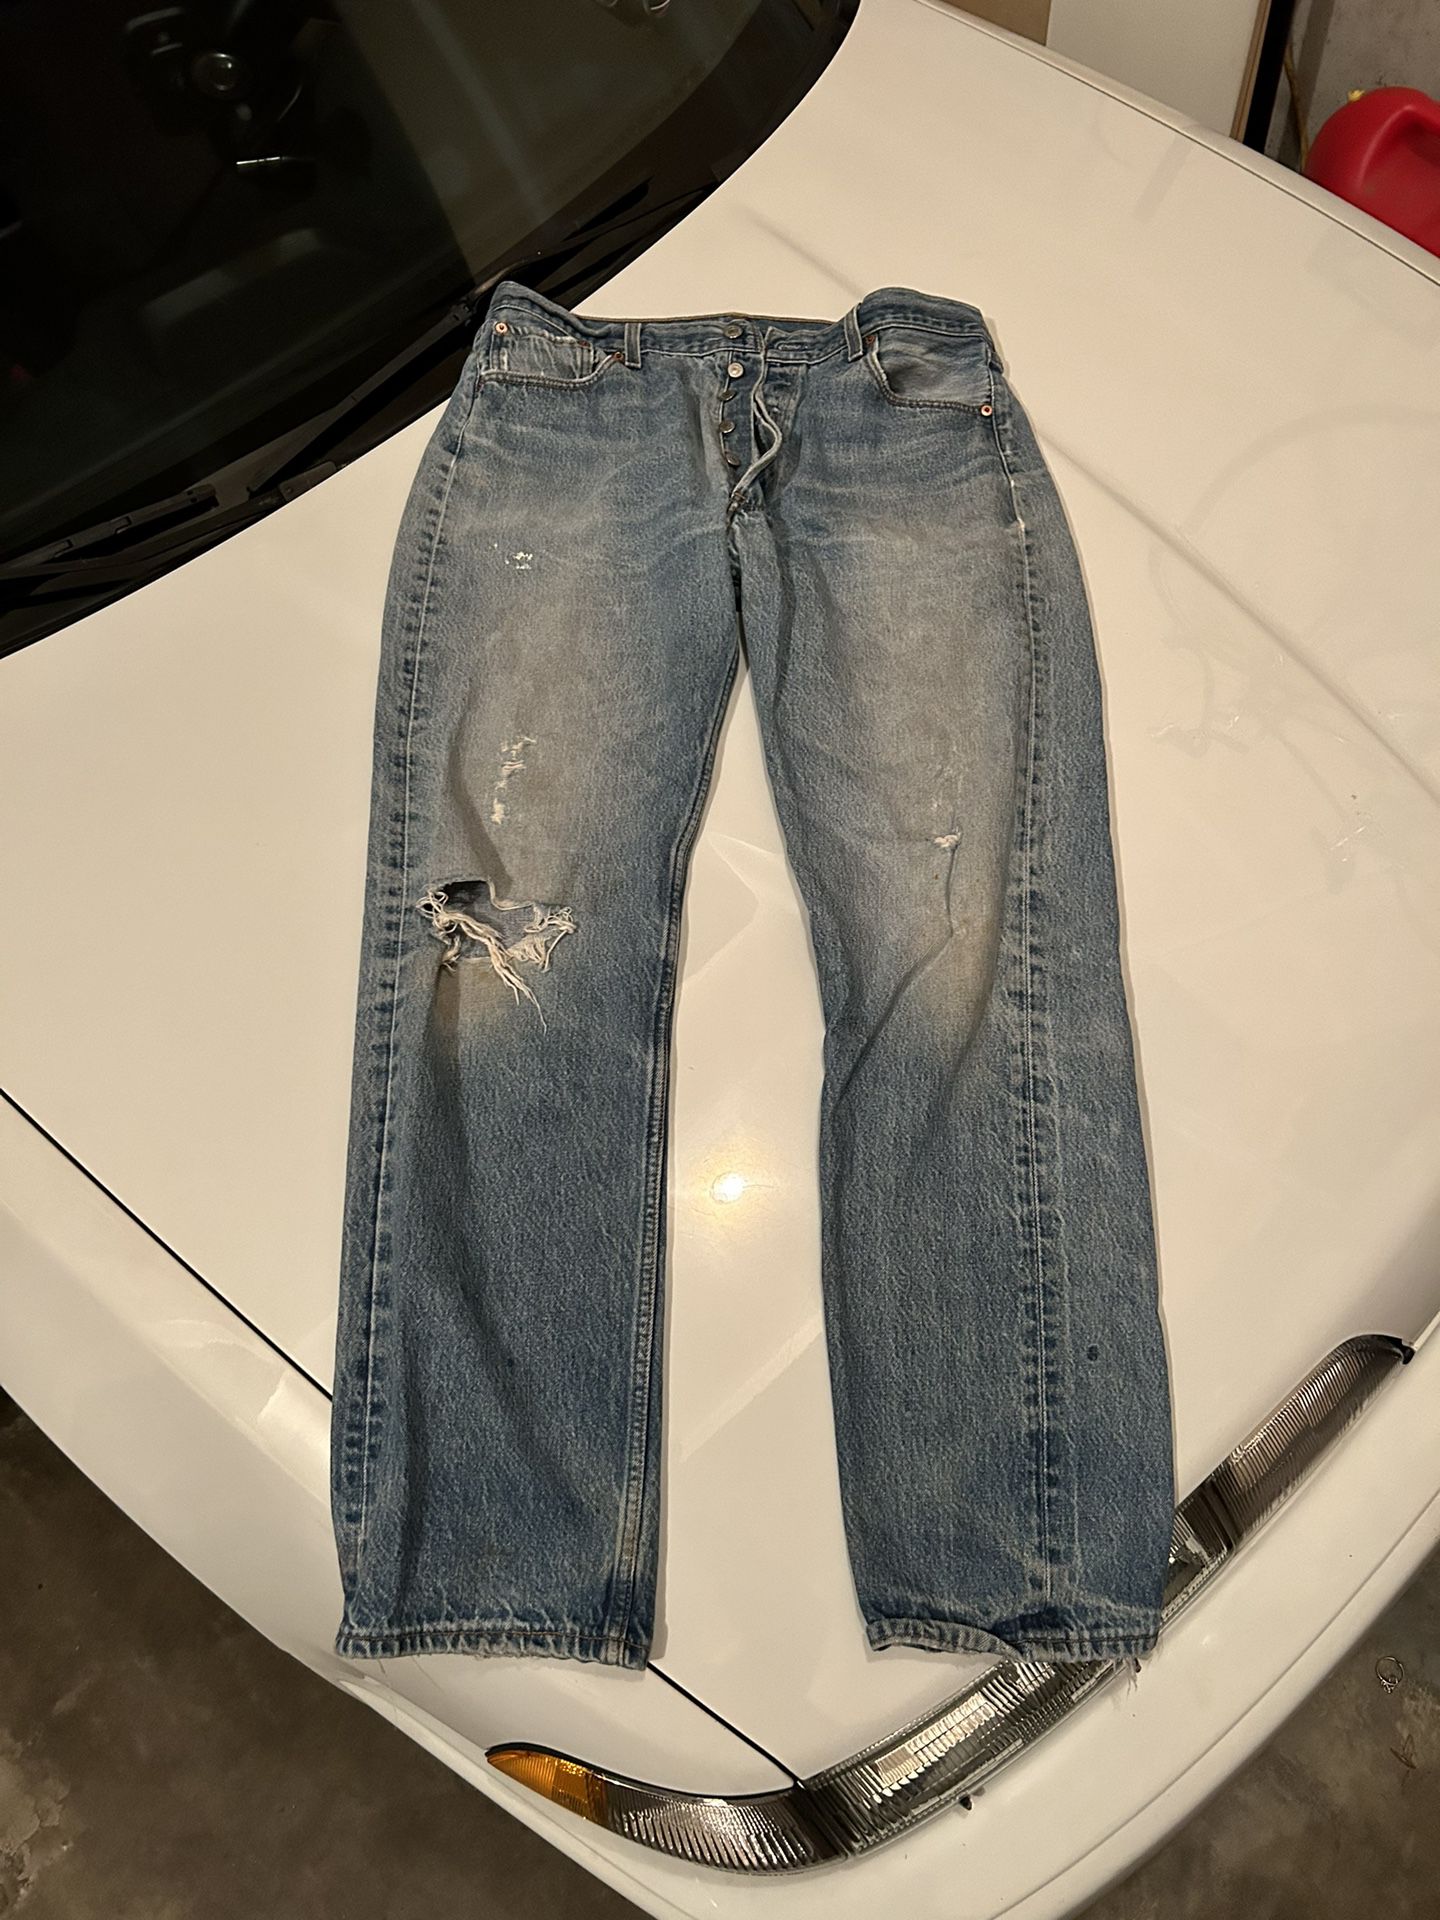 Levi's 501 Distressed Denim Jeans 90s for Sale in Auburn, WA - OfferUp